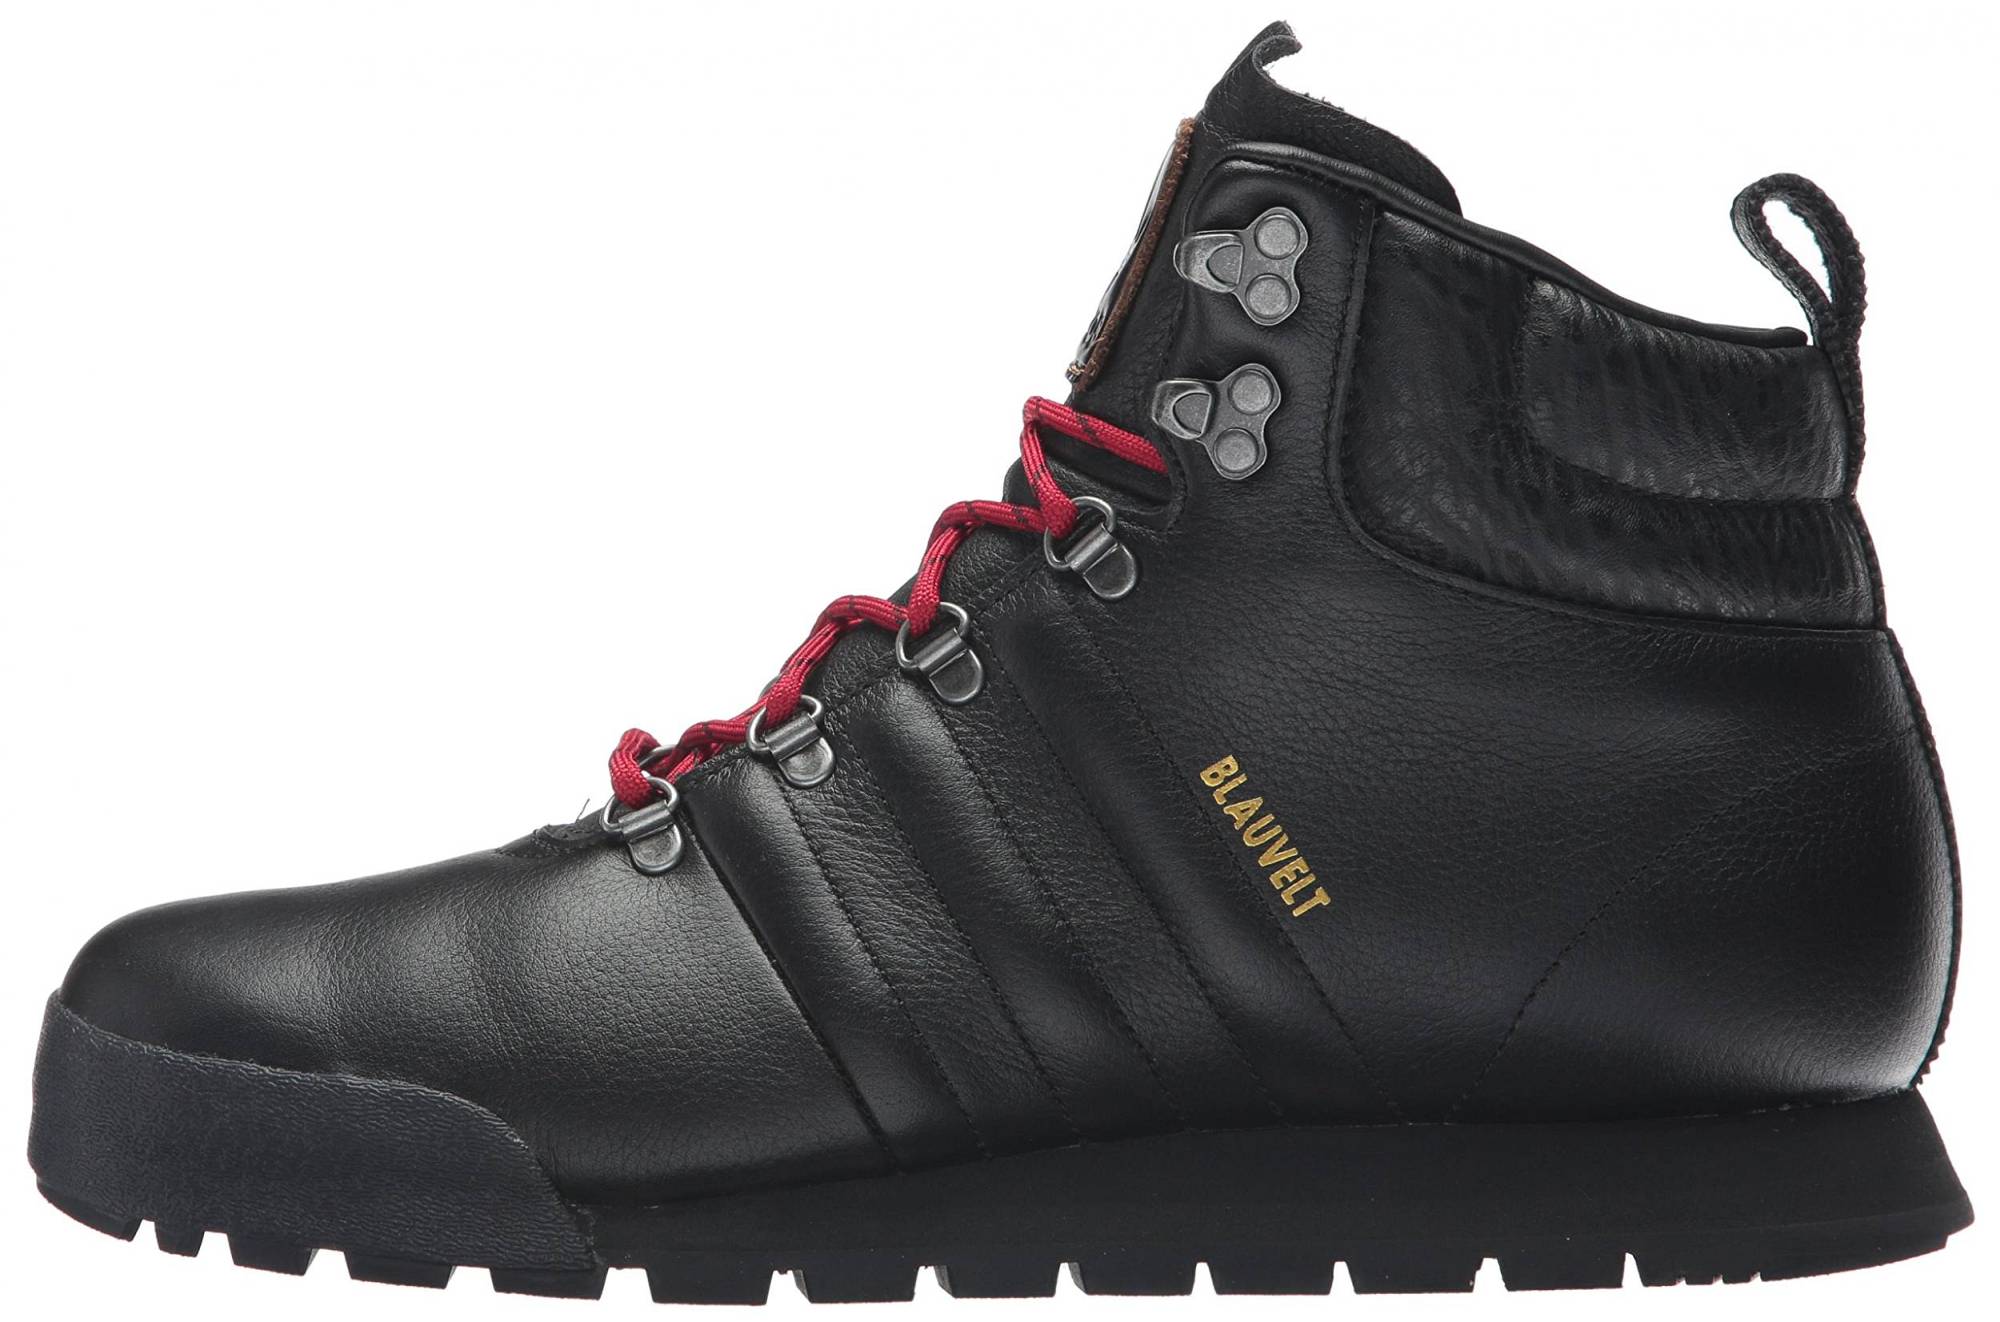 Adidas Jake Blauvelt Boot – Shoes Reviews & Reasons To Buy